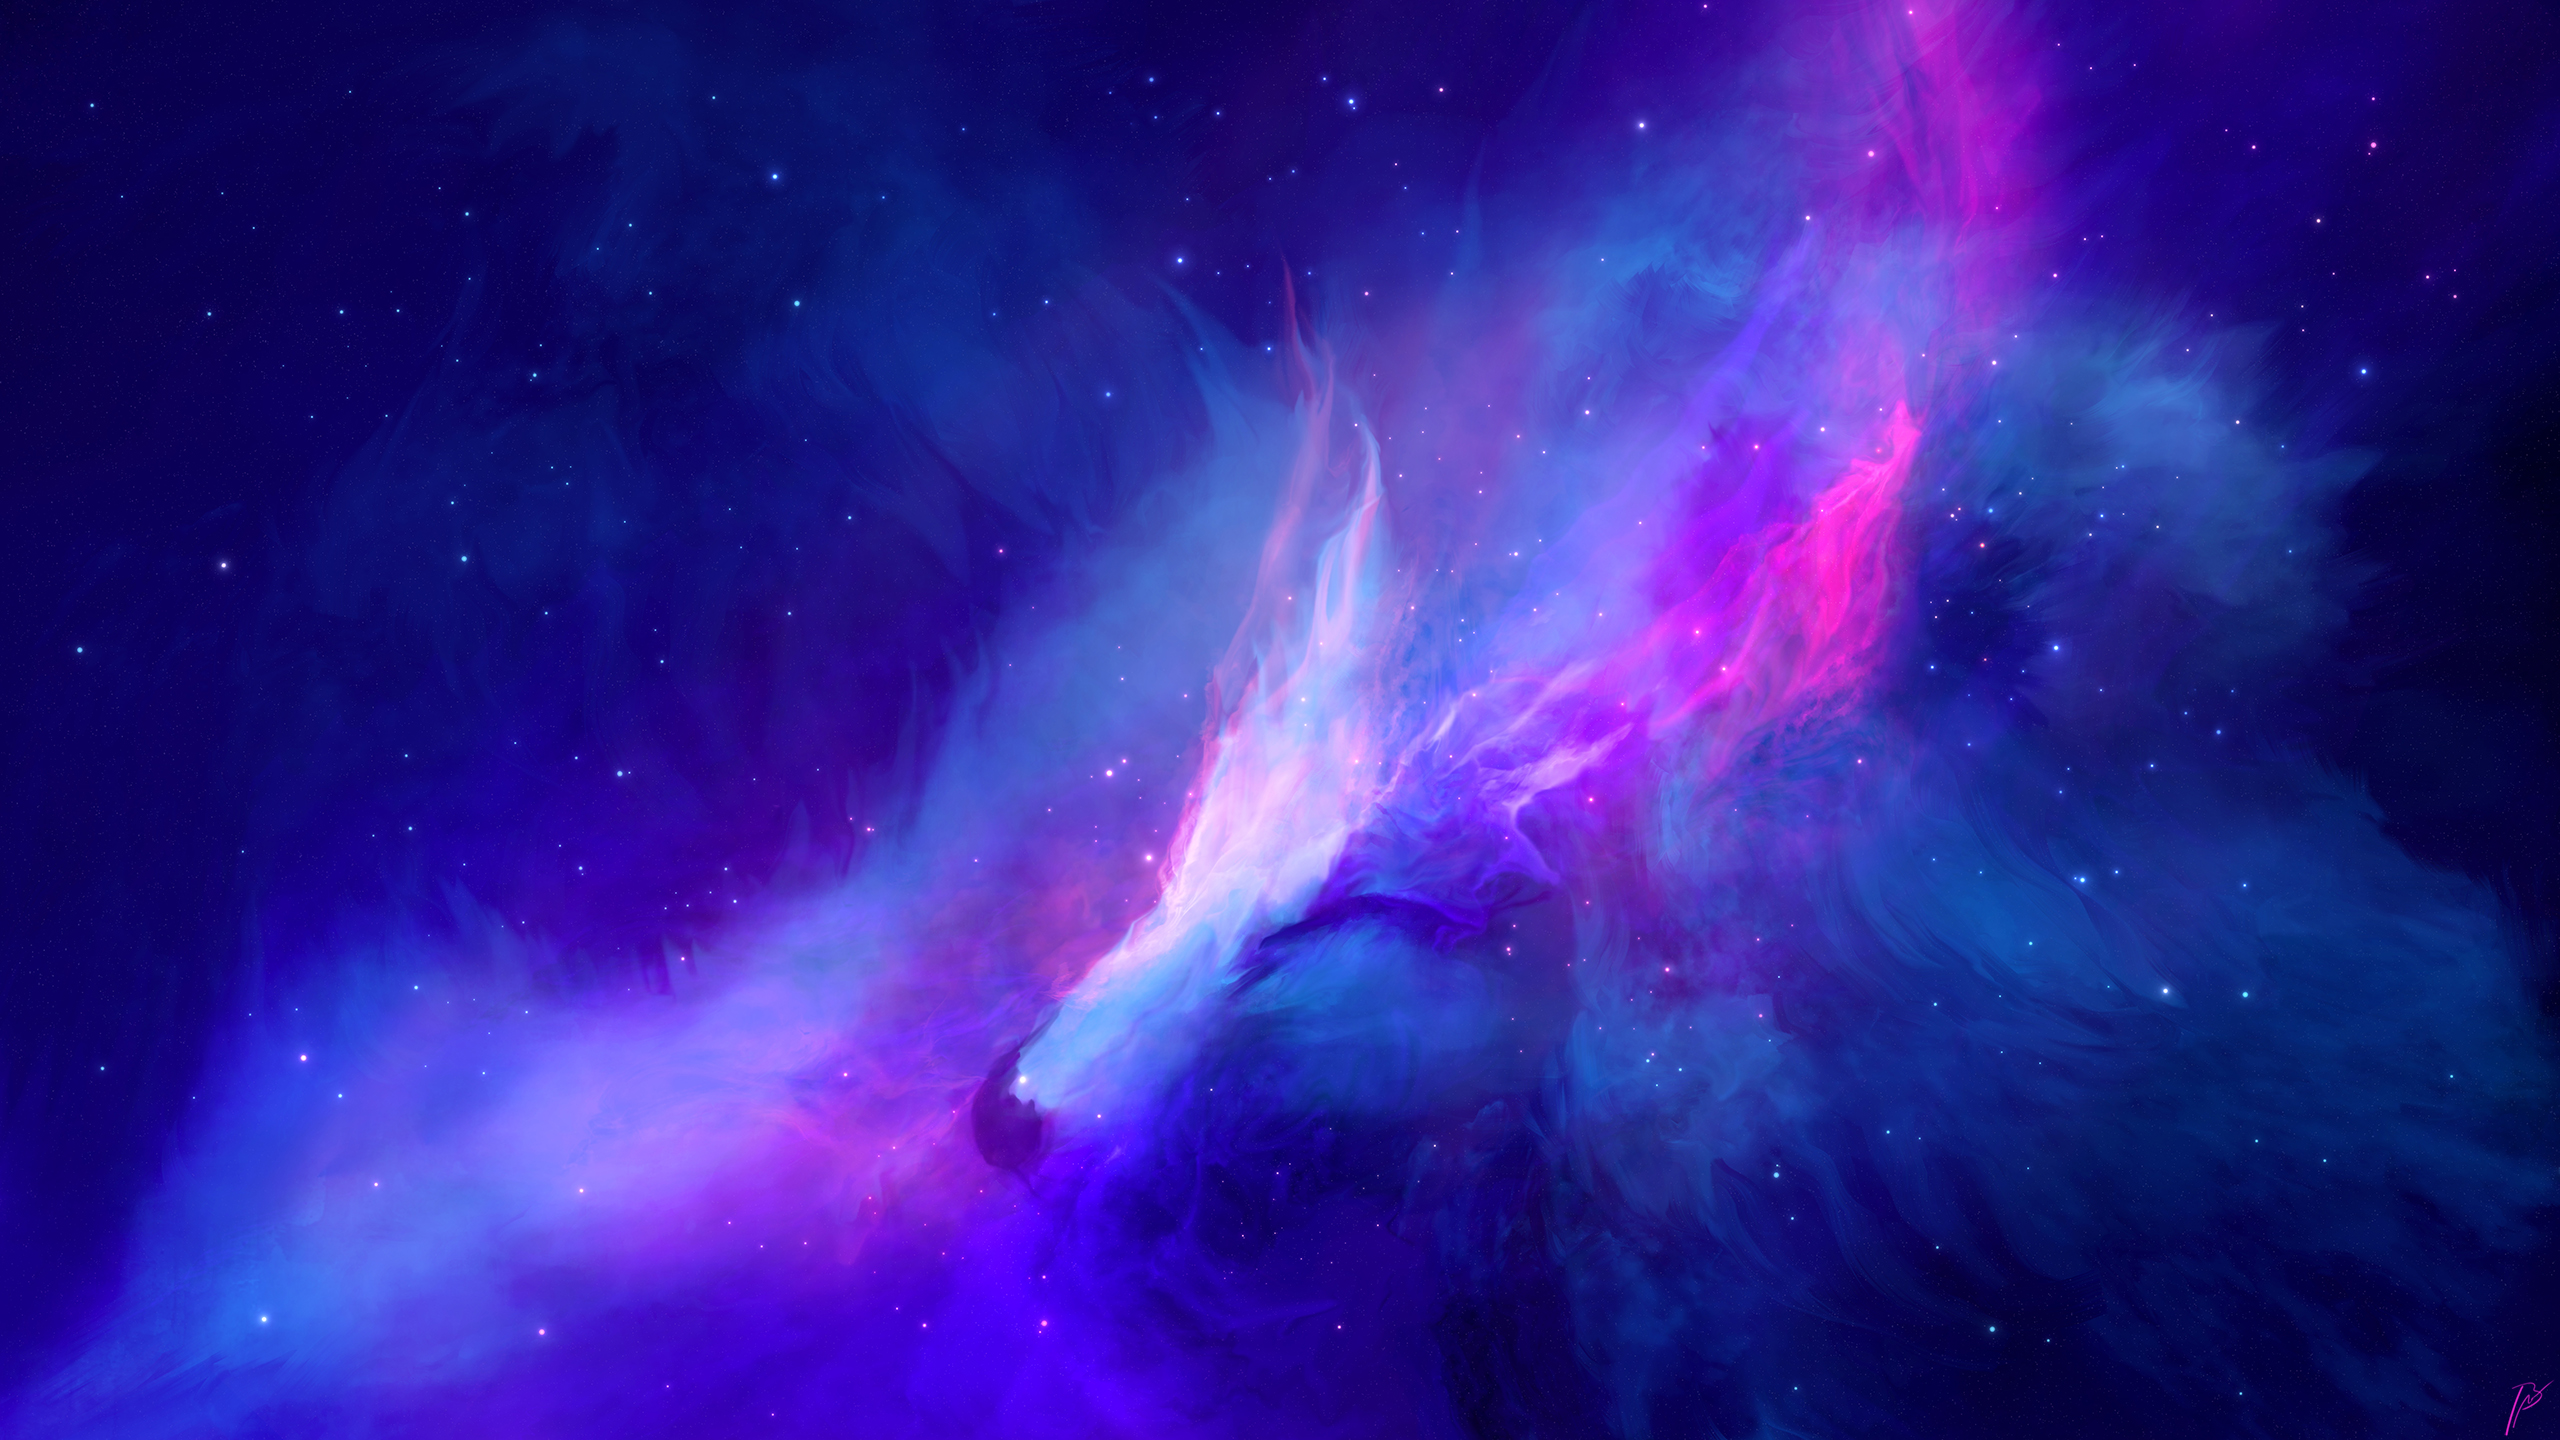 Nebula Space Art, HD Digital Universe, 4k Wallpapers ...